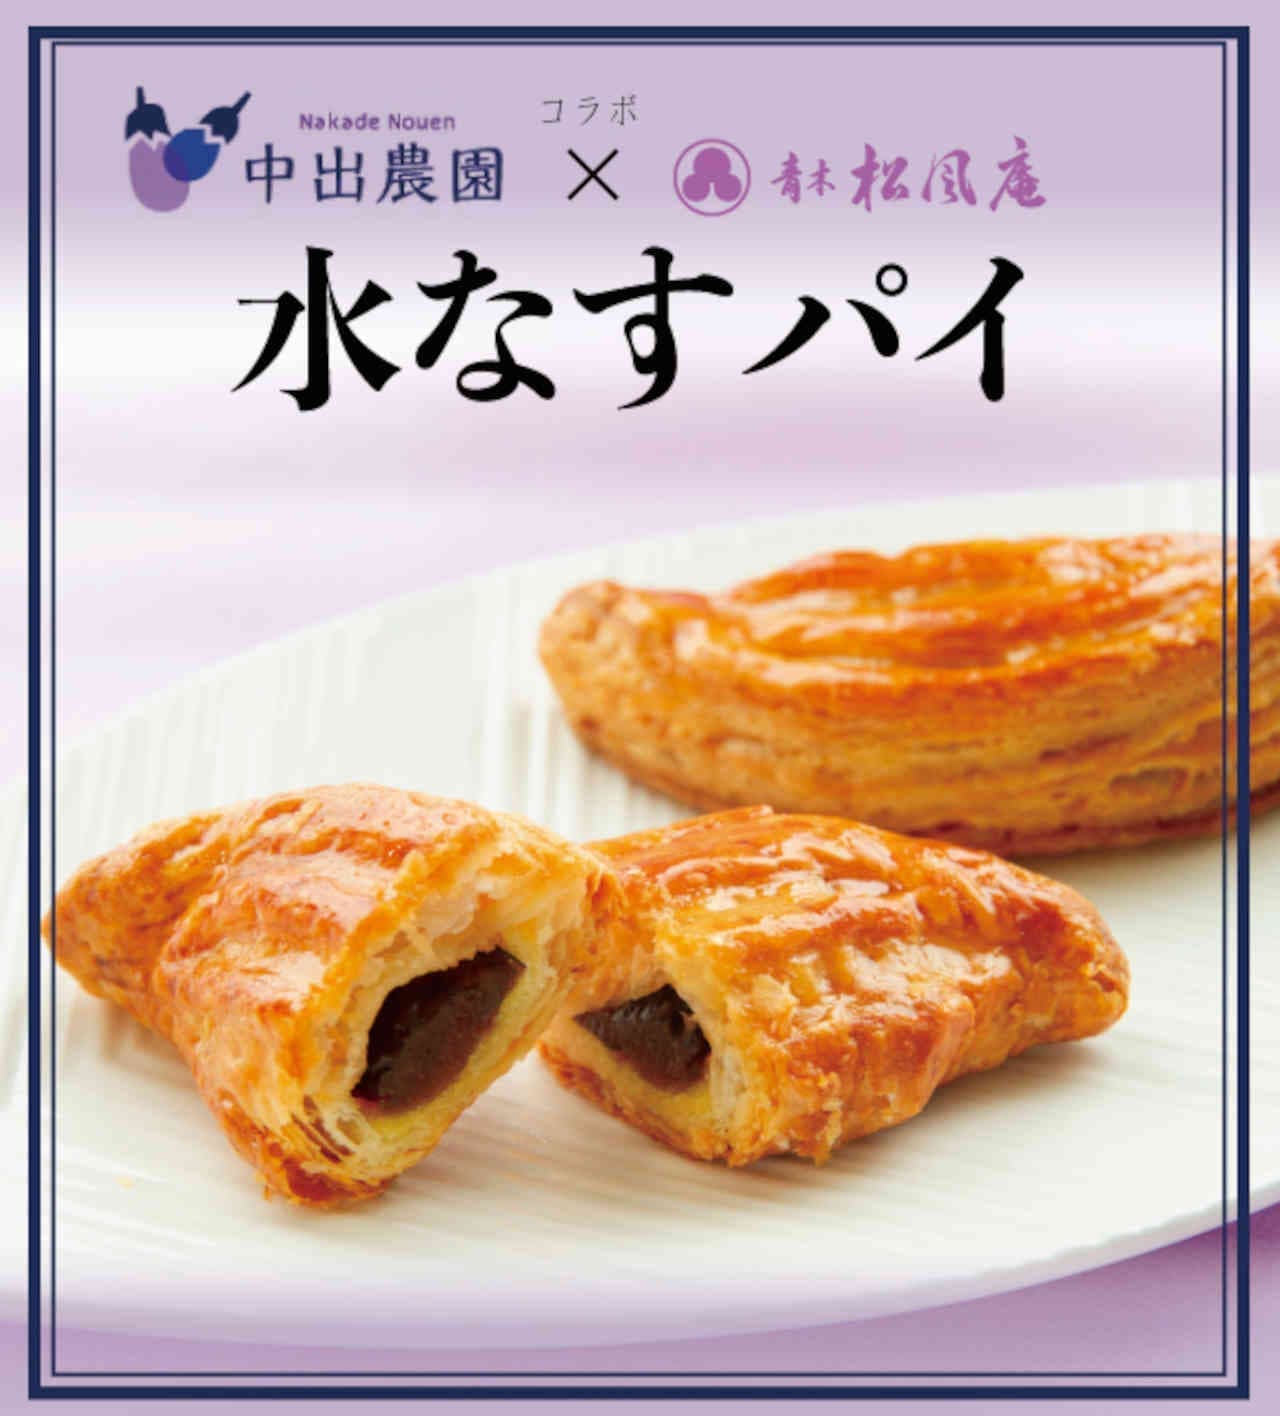 Aoki Shofuan "Water Eggplant Pie